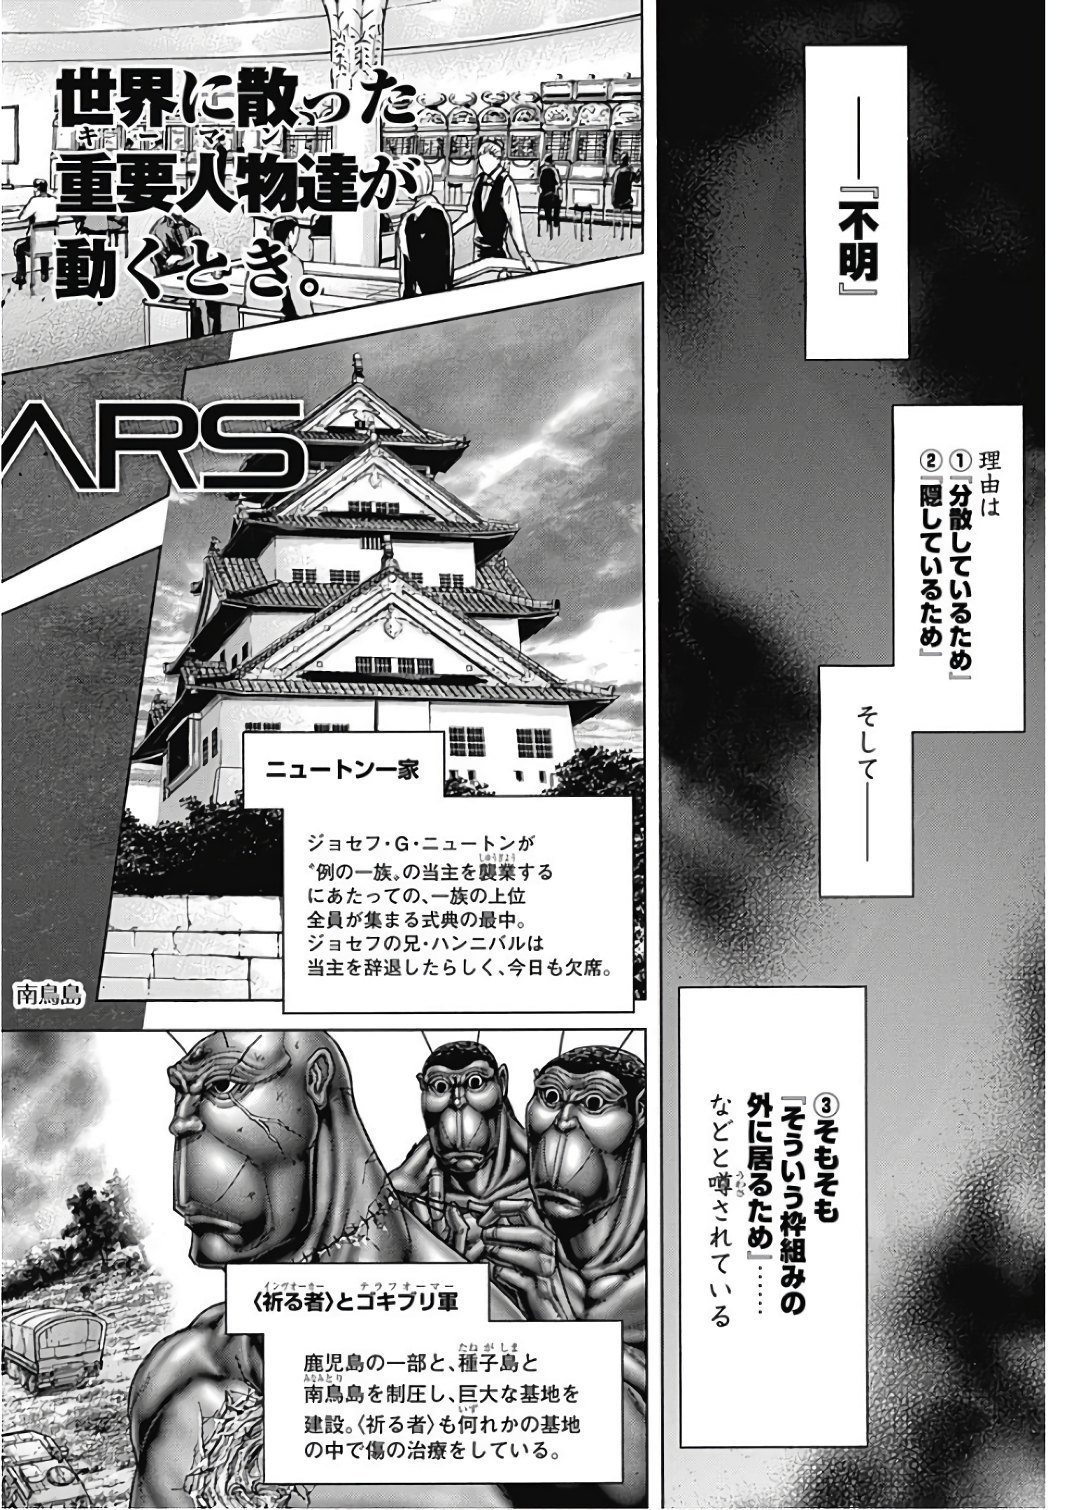 Alien Vs Yakuza Terra Formars 48 222 Full Raws